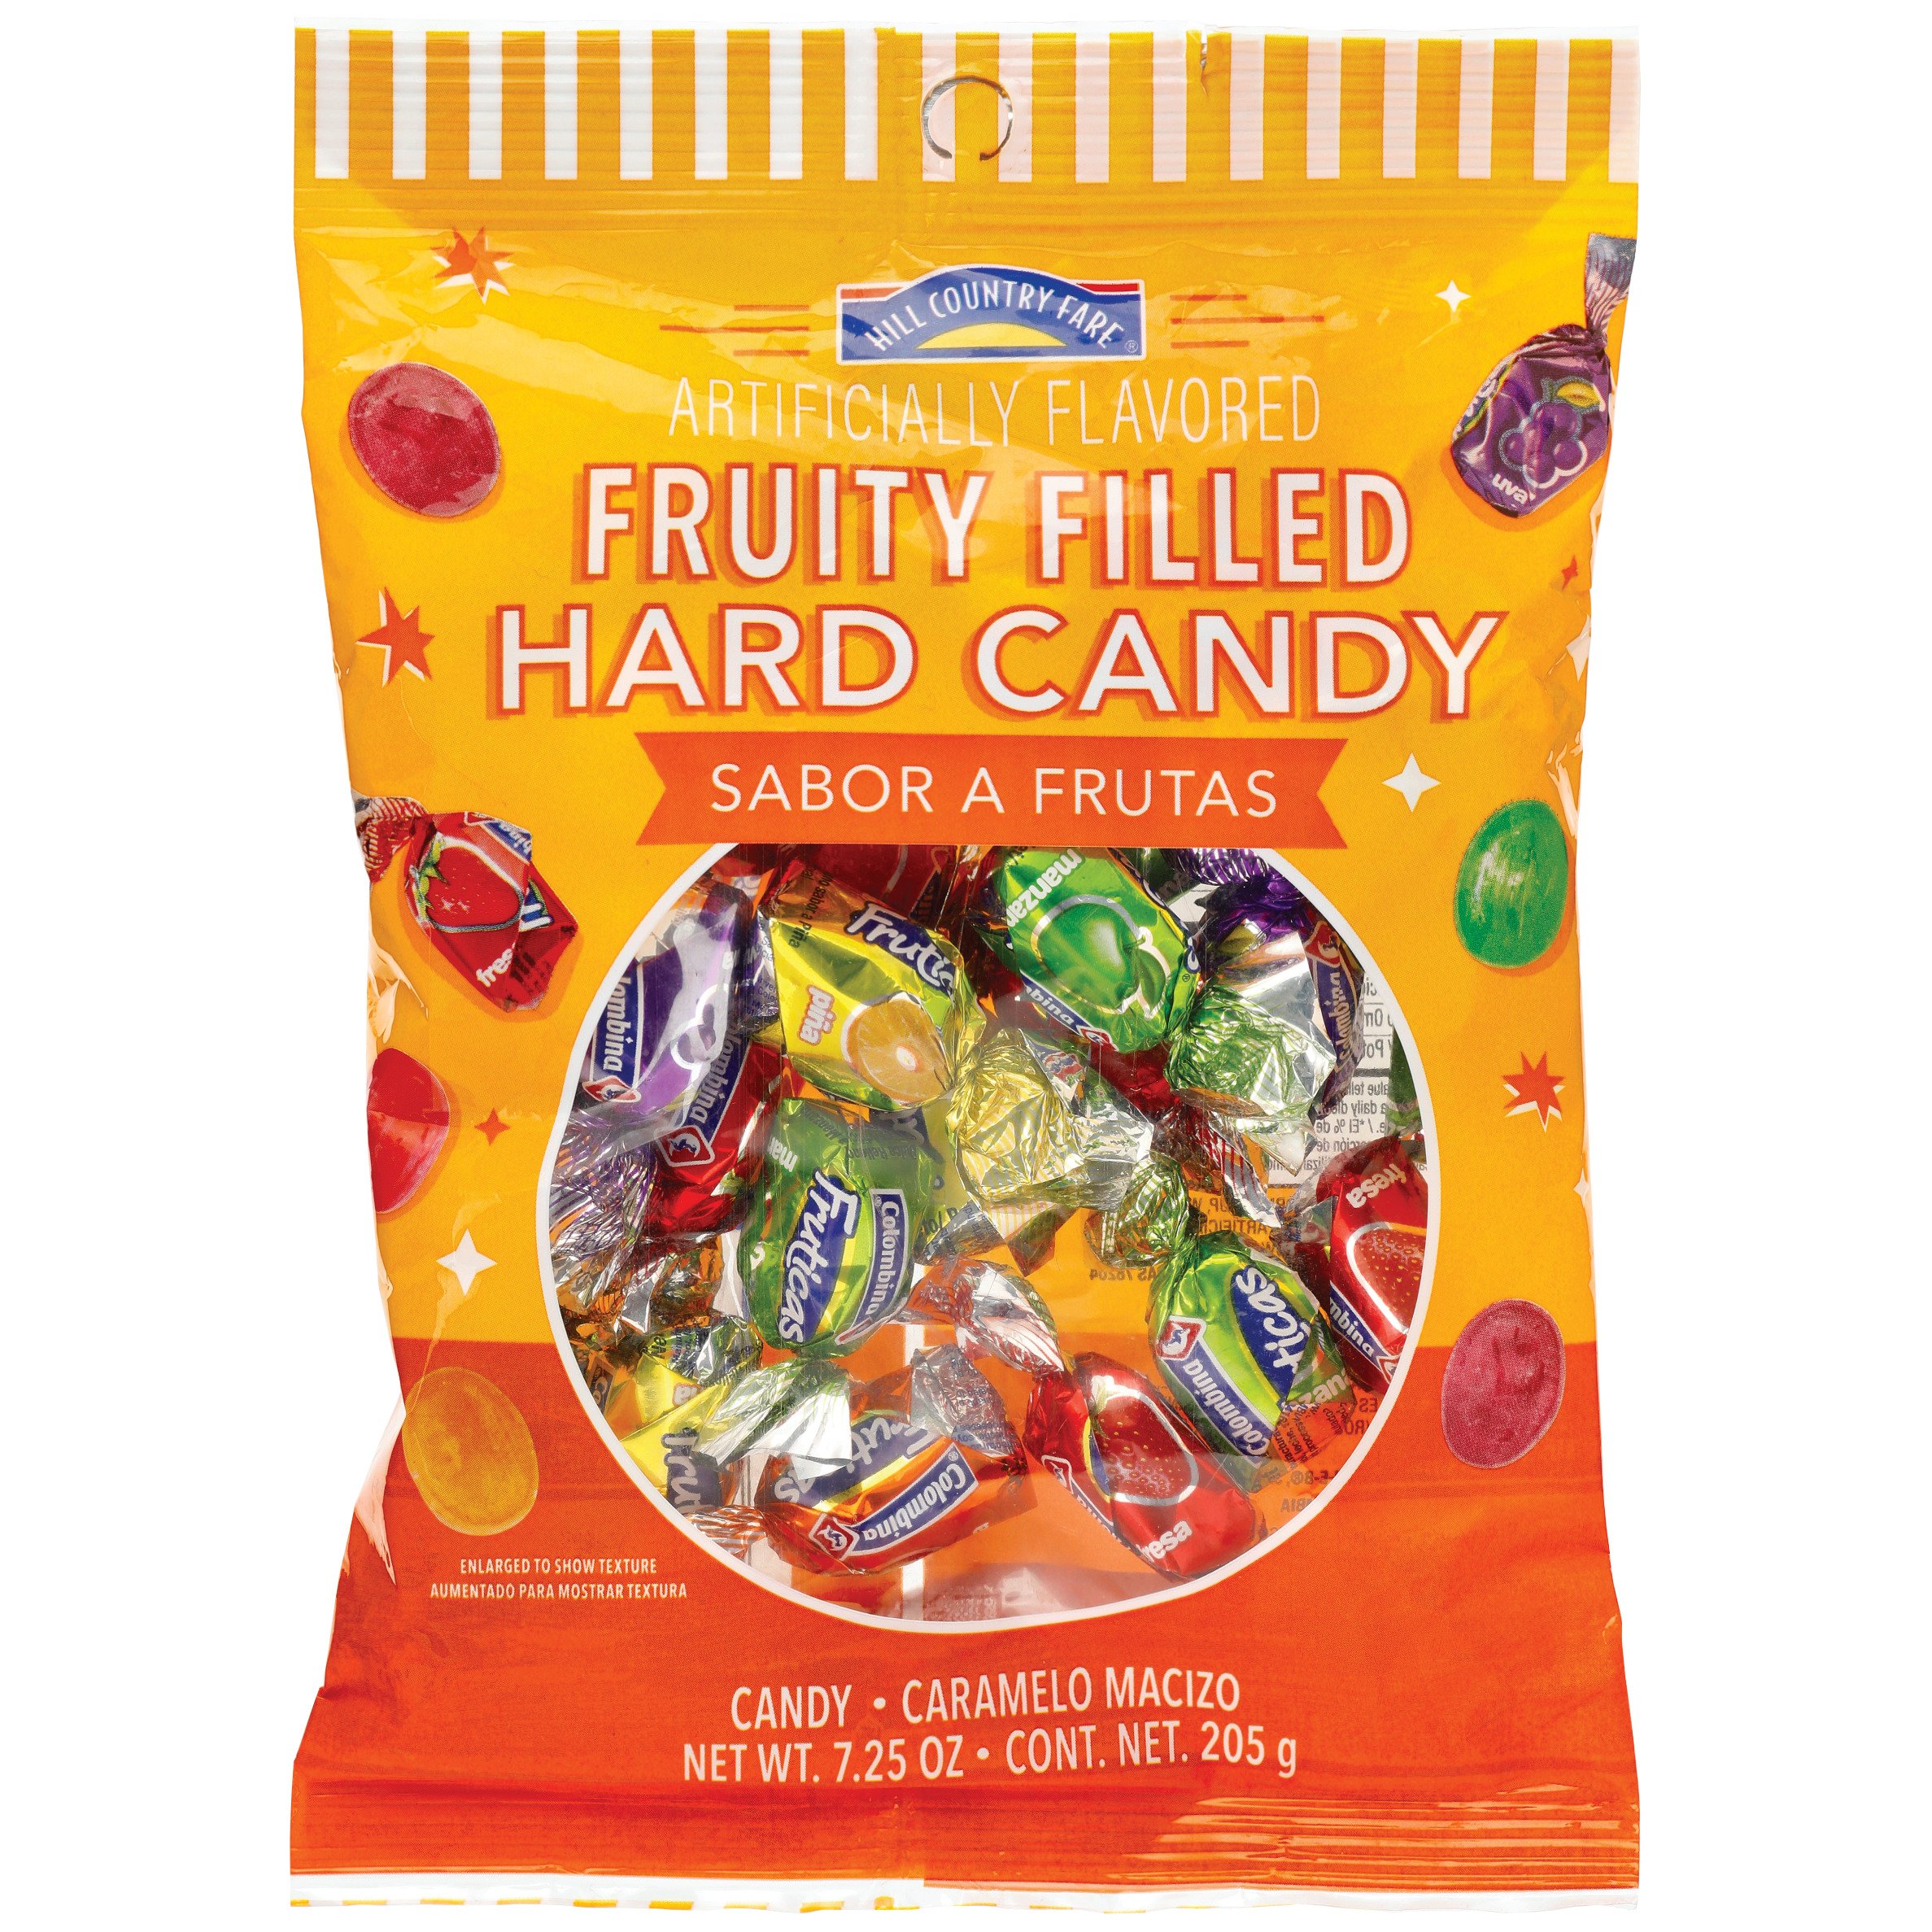 Hill Country Fare Candy Corn